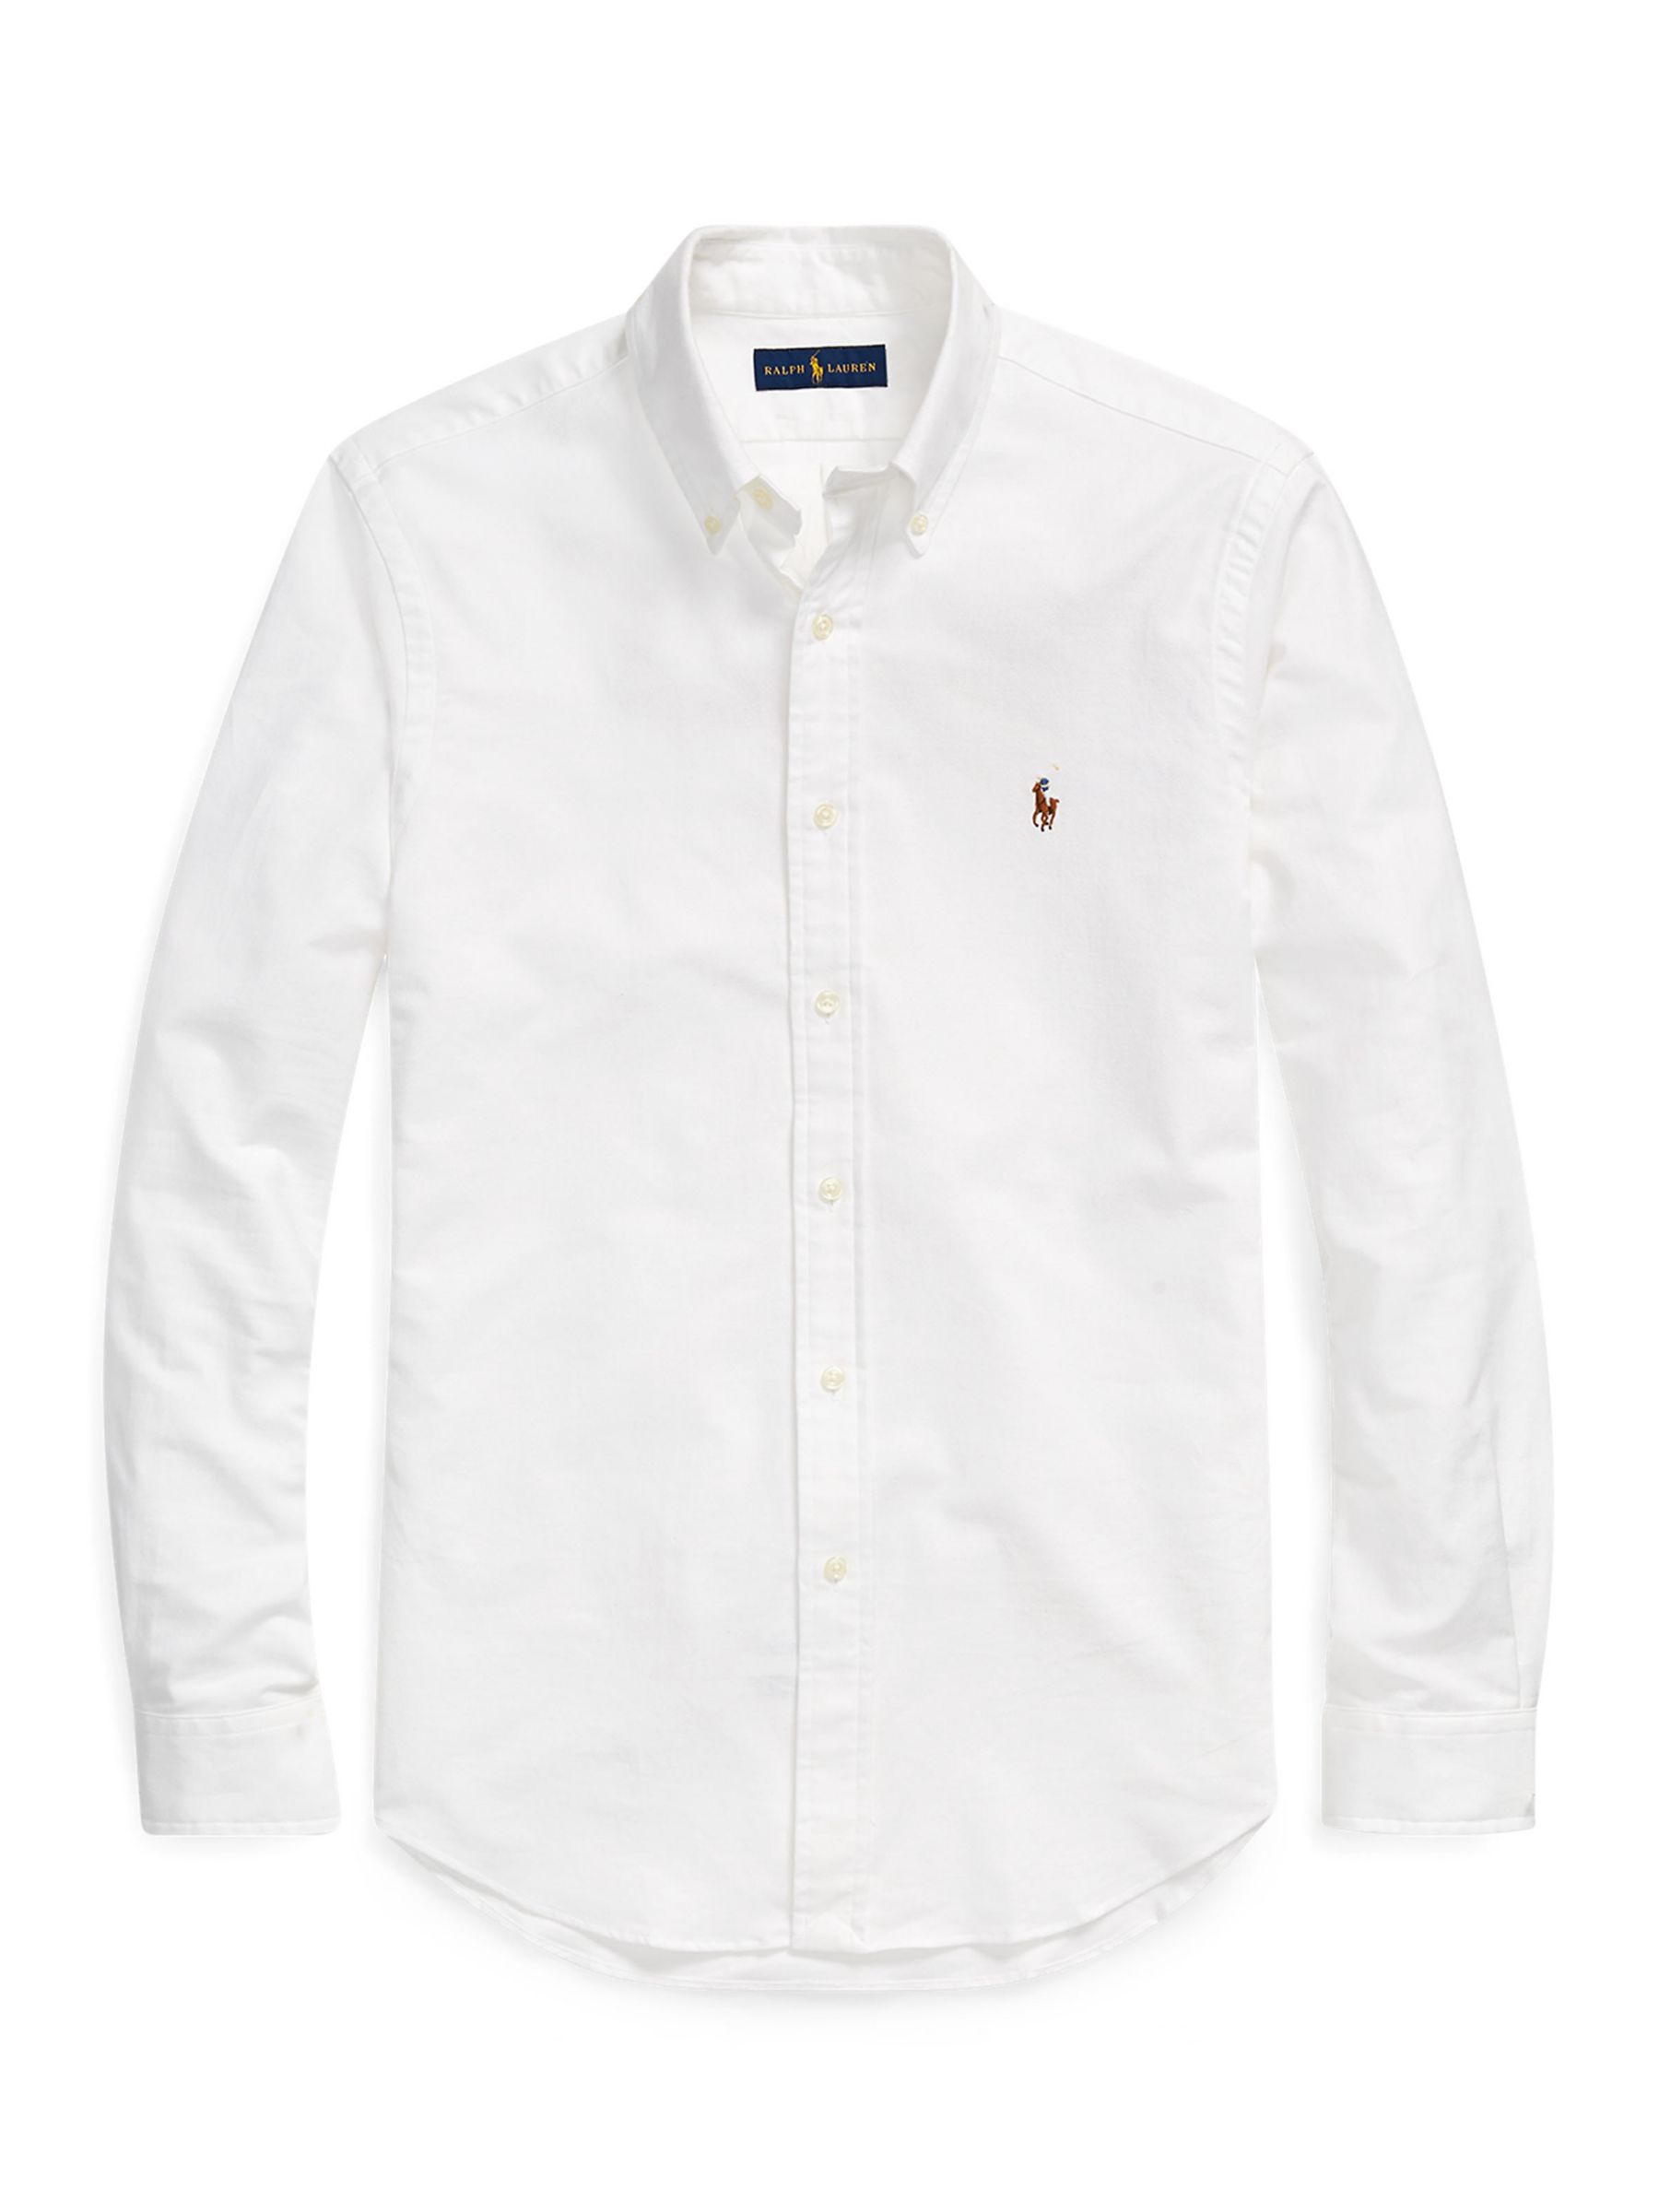 Polo Ralph Lauren Cotton Oxford Slim Fit Shirt, White, M